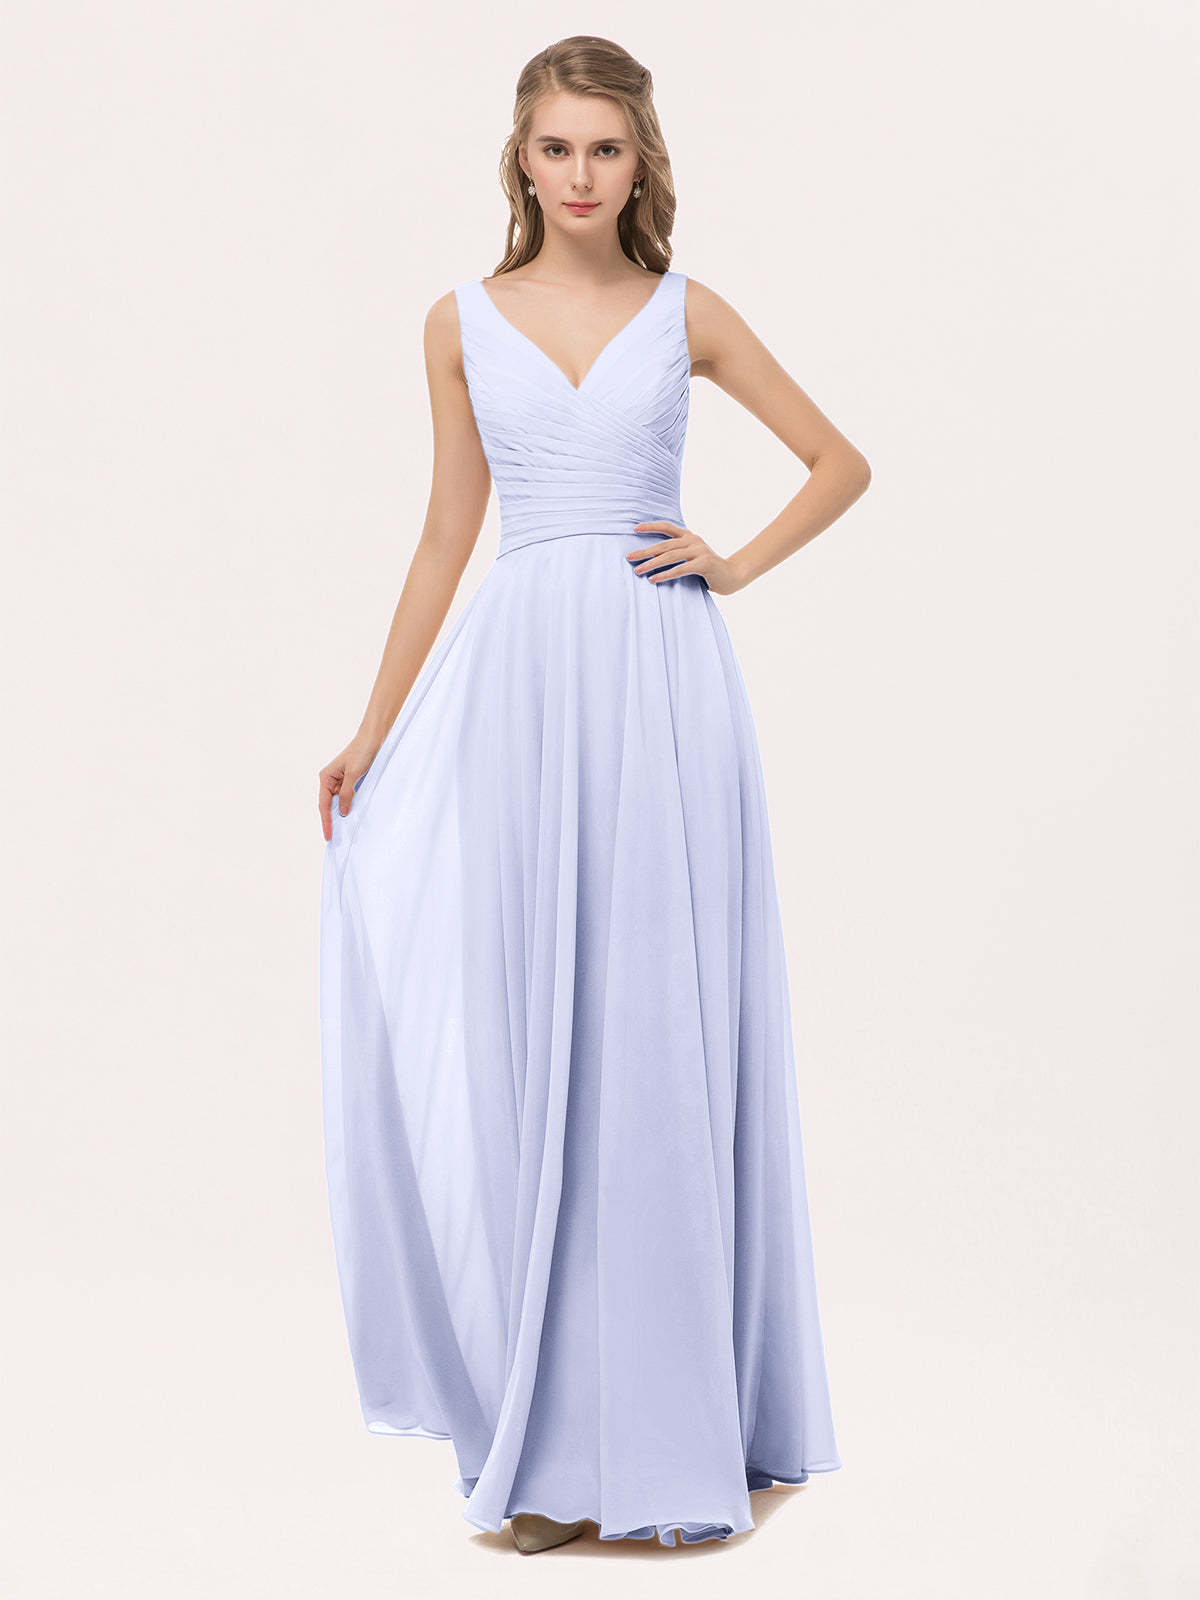 Lavender Bridesmaid Dresses - Short & Long Styles | Dessy Group